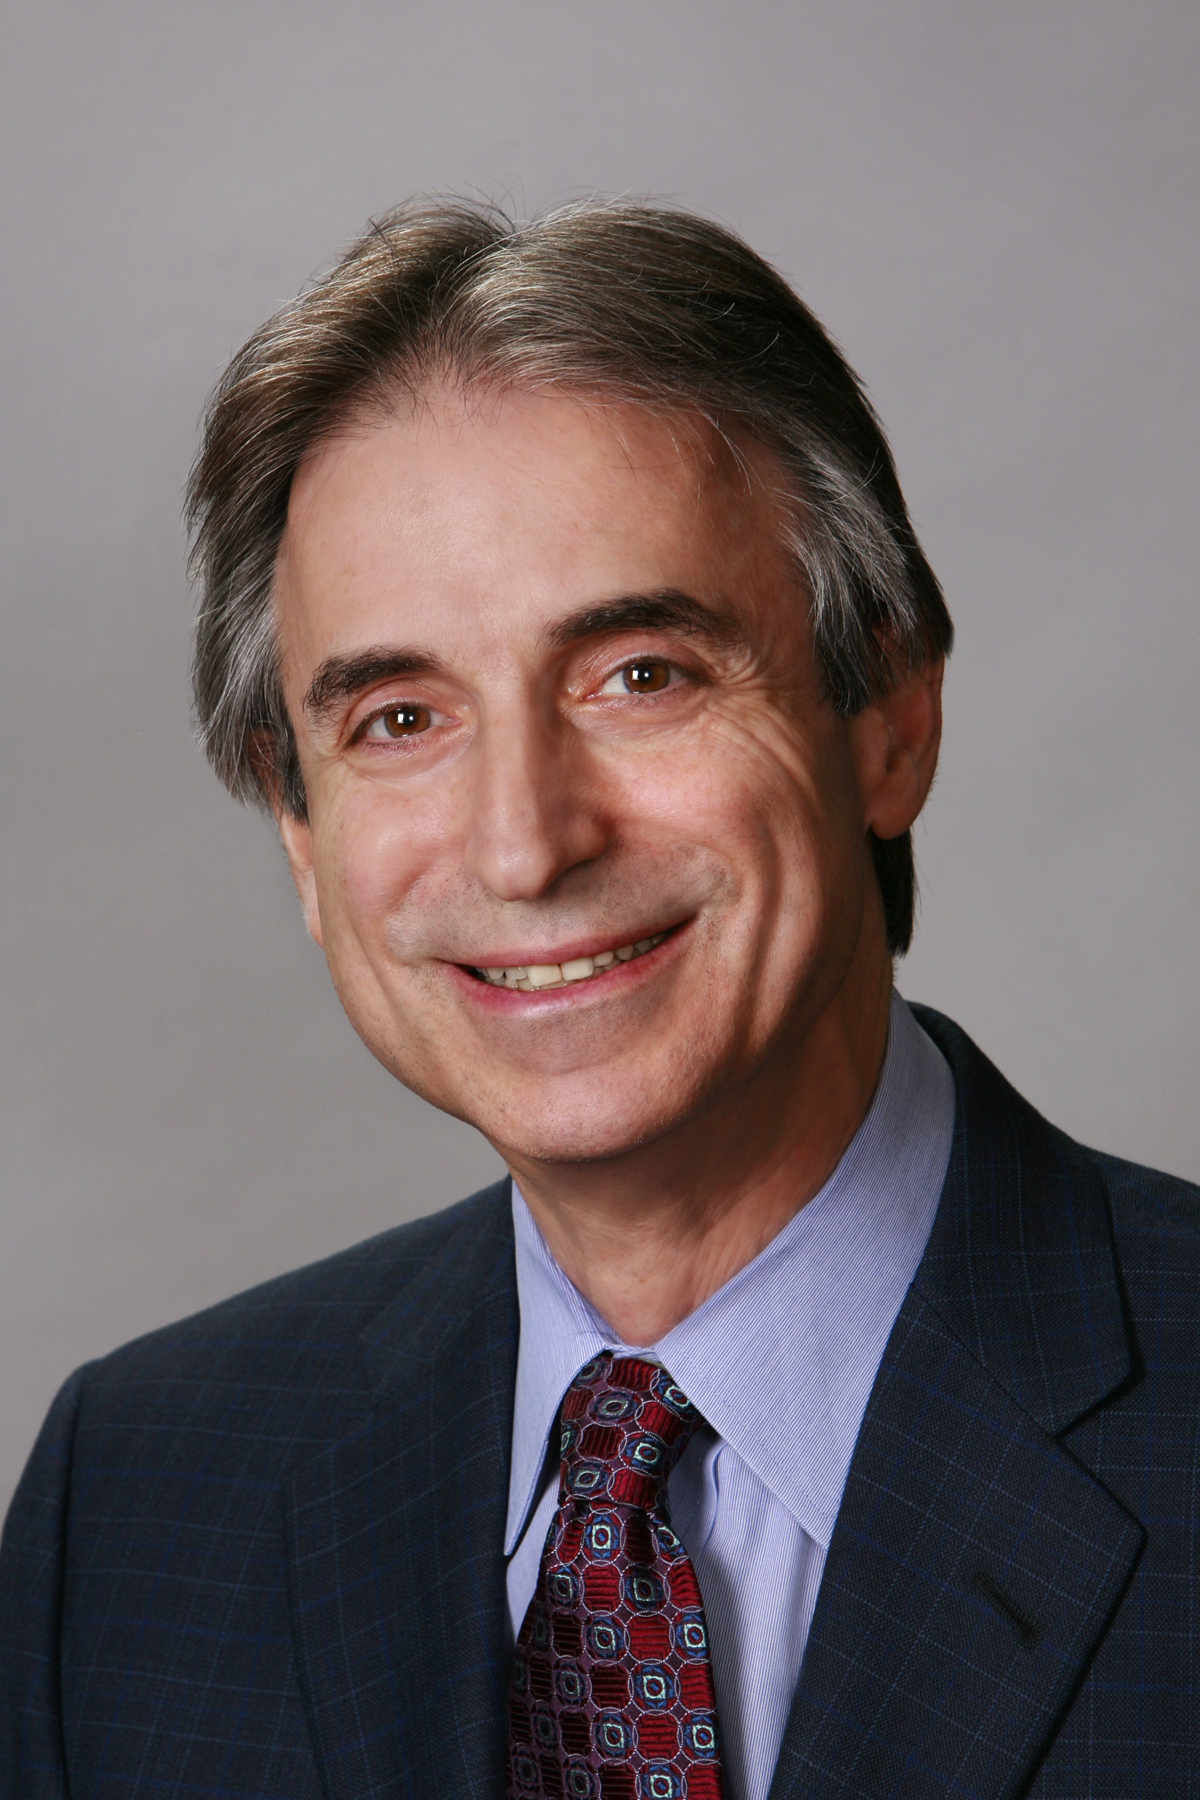 Dr. Douglas Katz